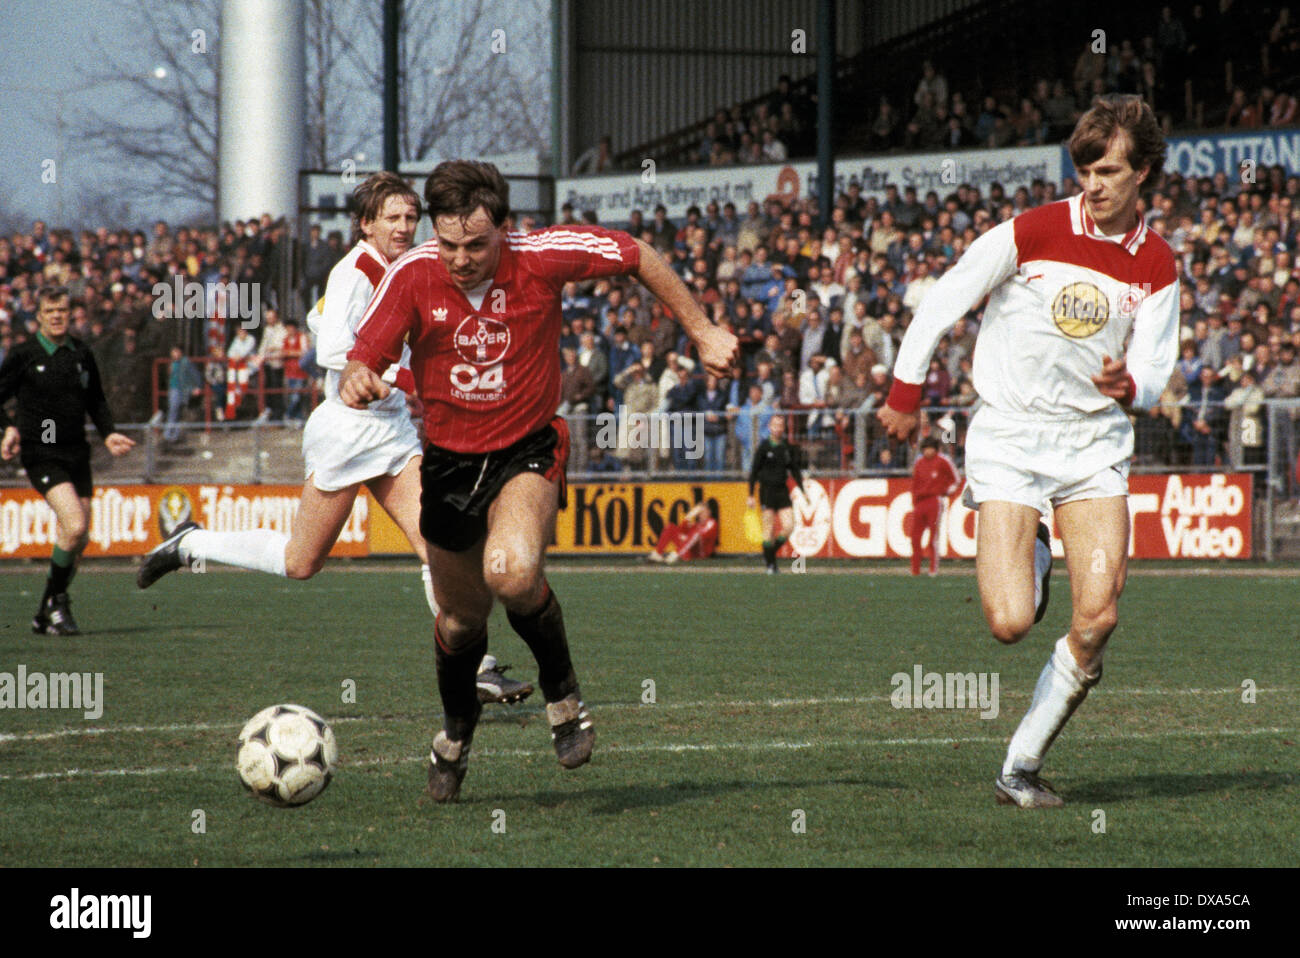 Calcio, Bundesliga, 1983/1984, Ulrich Haberland Stadium, Bayer 04 Leverkusen contro Fortuna Duesseldorf 2:0, scena del match, f.l.t.r. team leader Gerd Zewe (Fortuna), Thomas Zechel (Bayer), Manfred Bockenfeld (Fortuna) Foto Stock